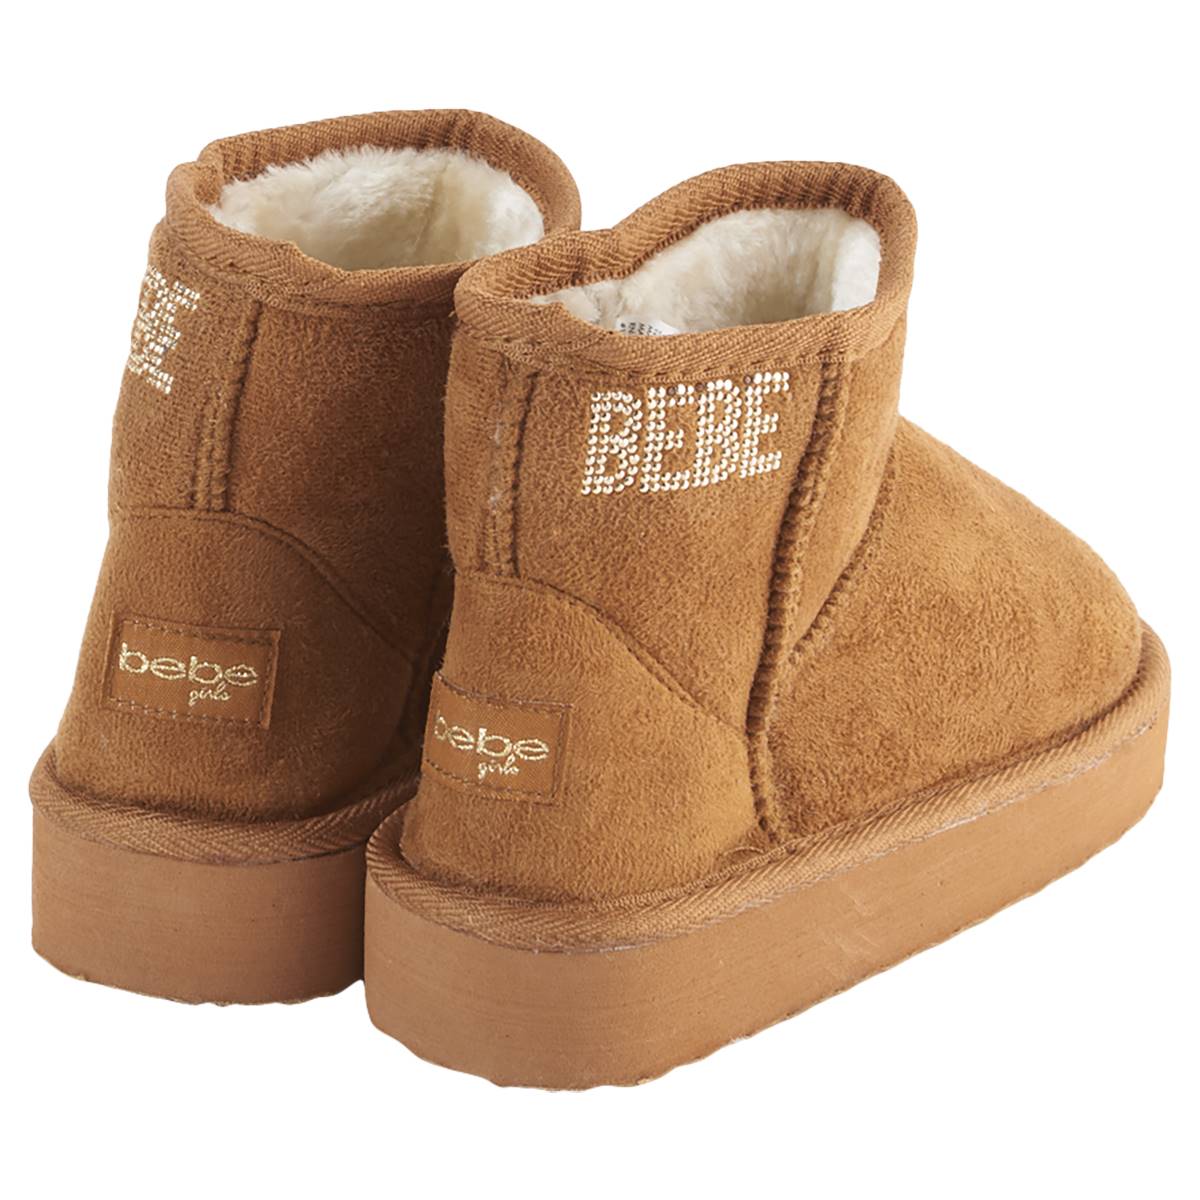 Girls Bebe Short Boots W/Rhinestone Logo